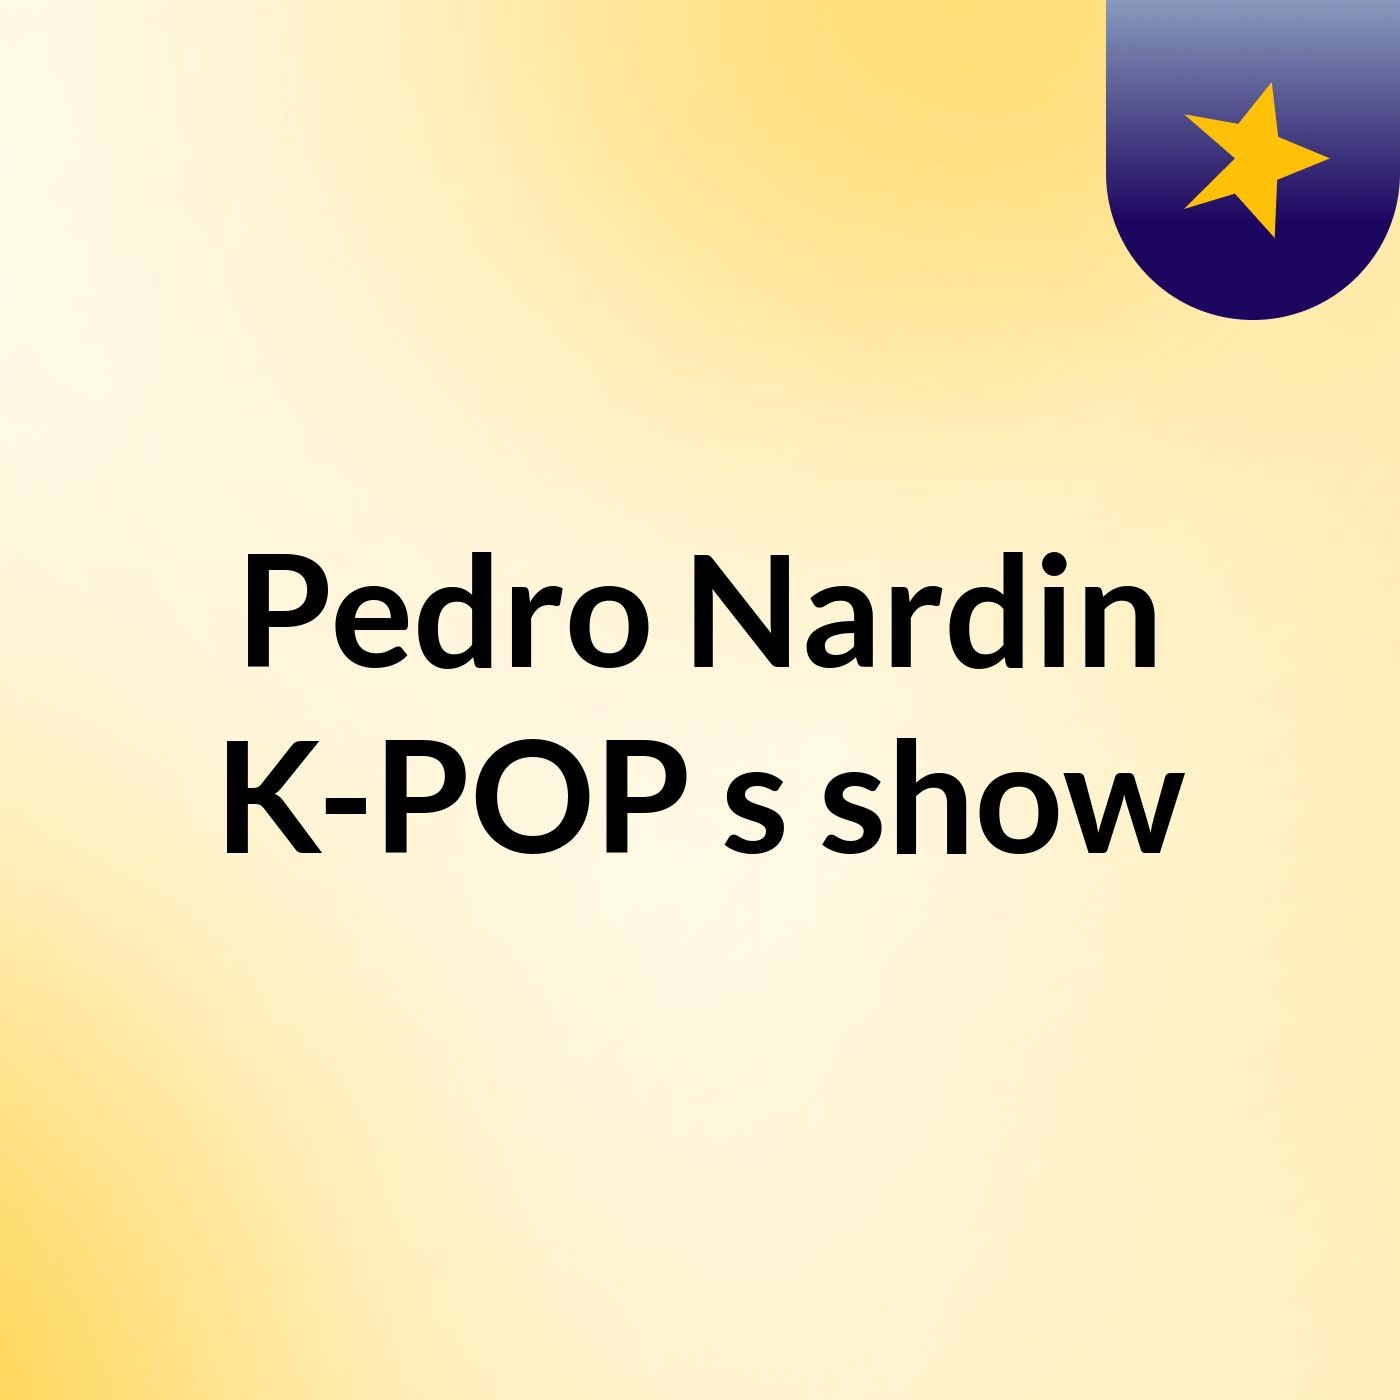 Pedro Nardin K-POP's show